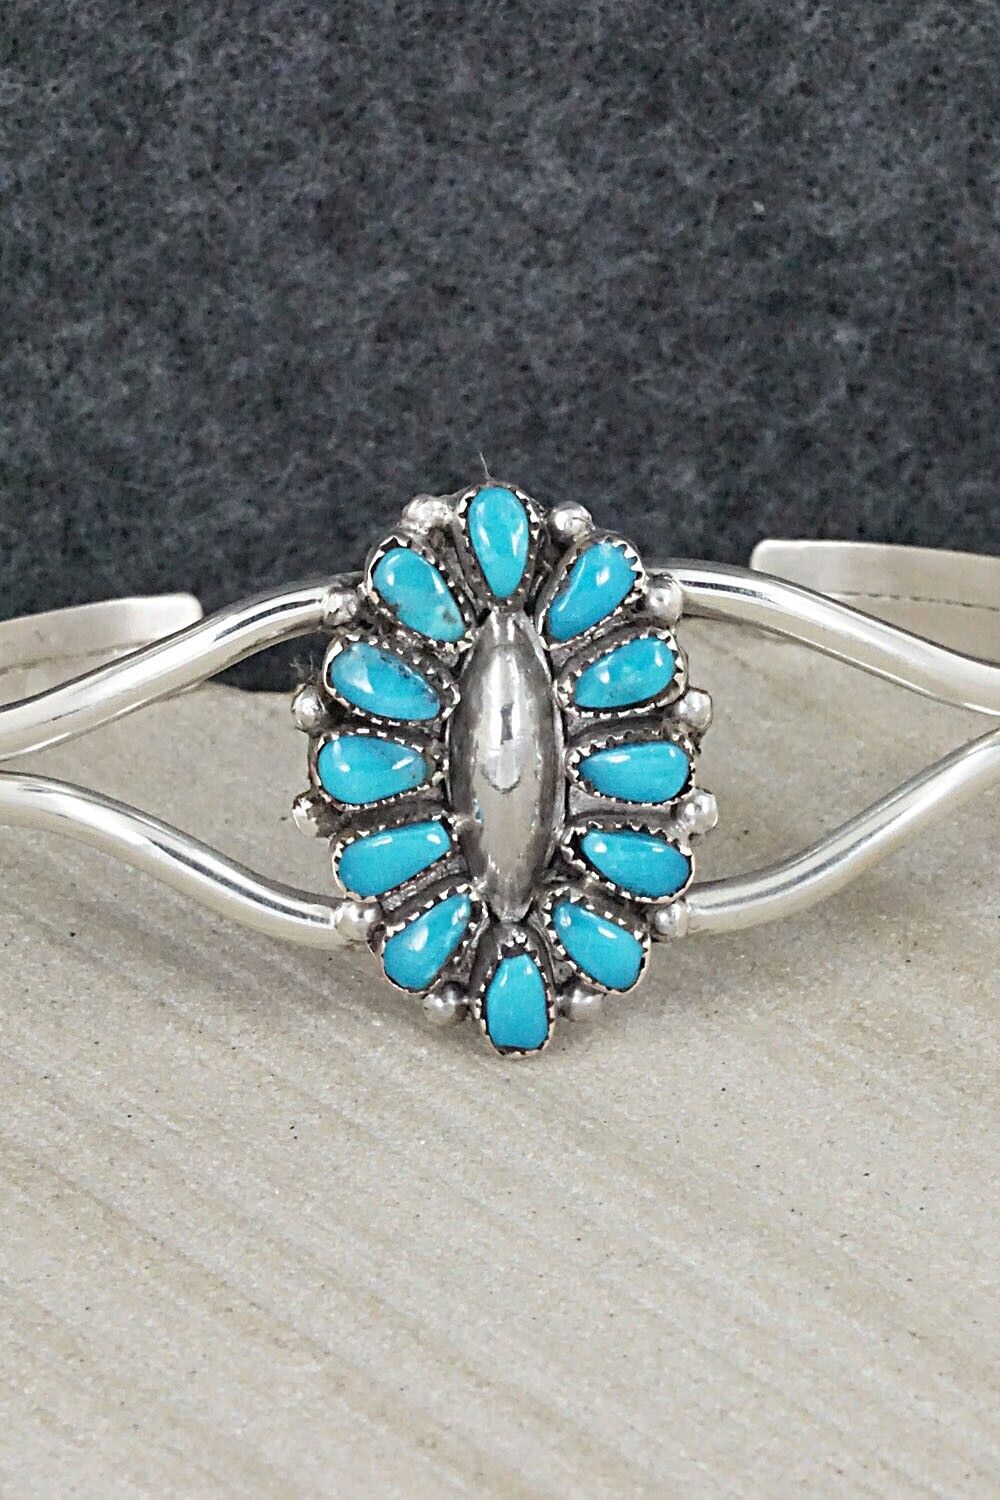 Turquoise & Sterling Silver Bracelet - MaryAnn Chavez